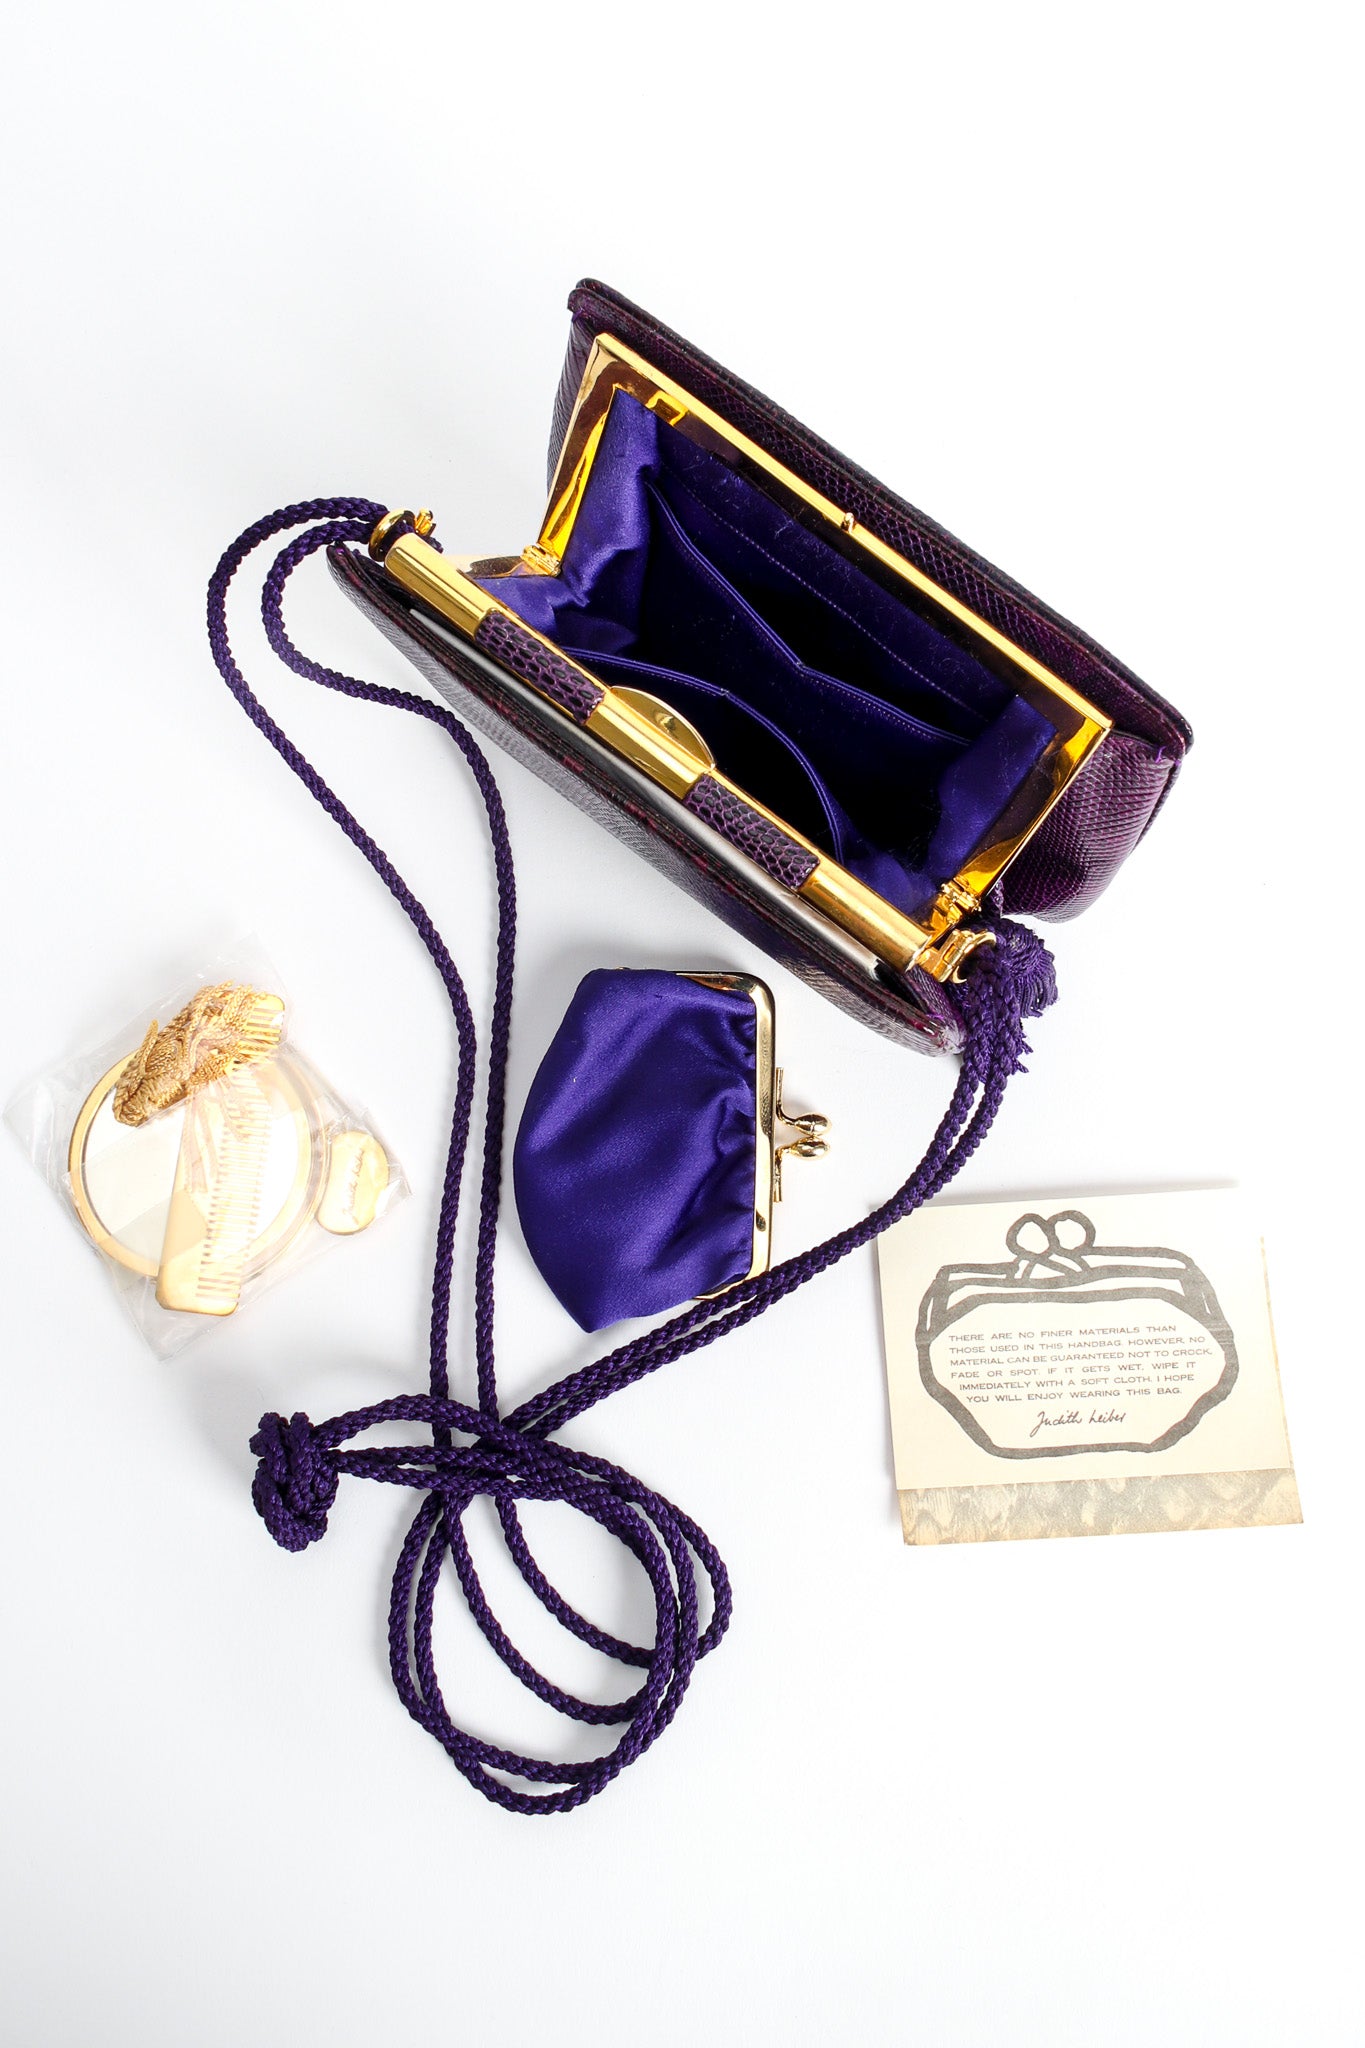 Vintage Judith Leiber Reptile Leather Mini Clutch Bag accessories & original paperwork @ Recess Los Angeles